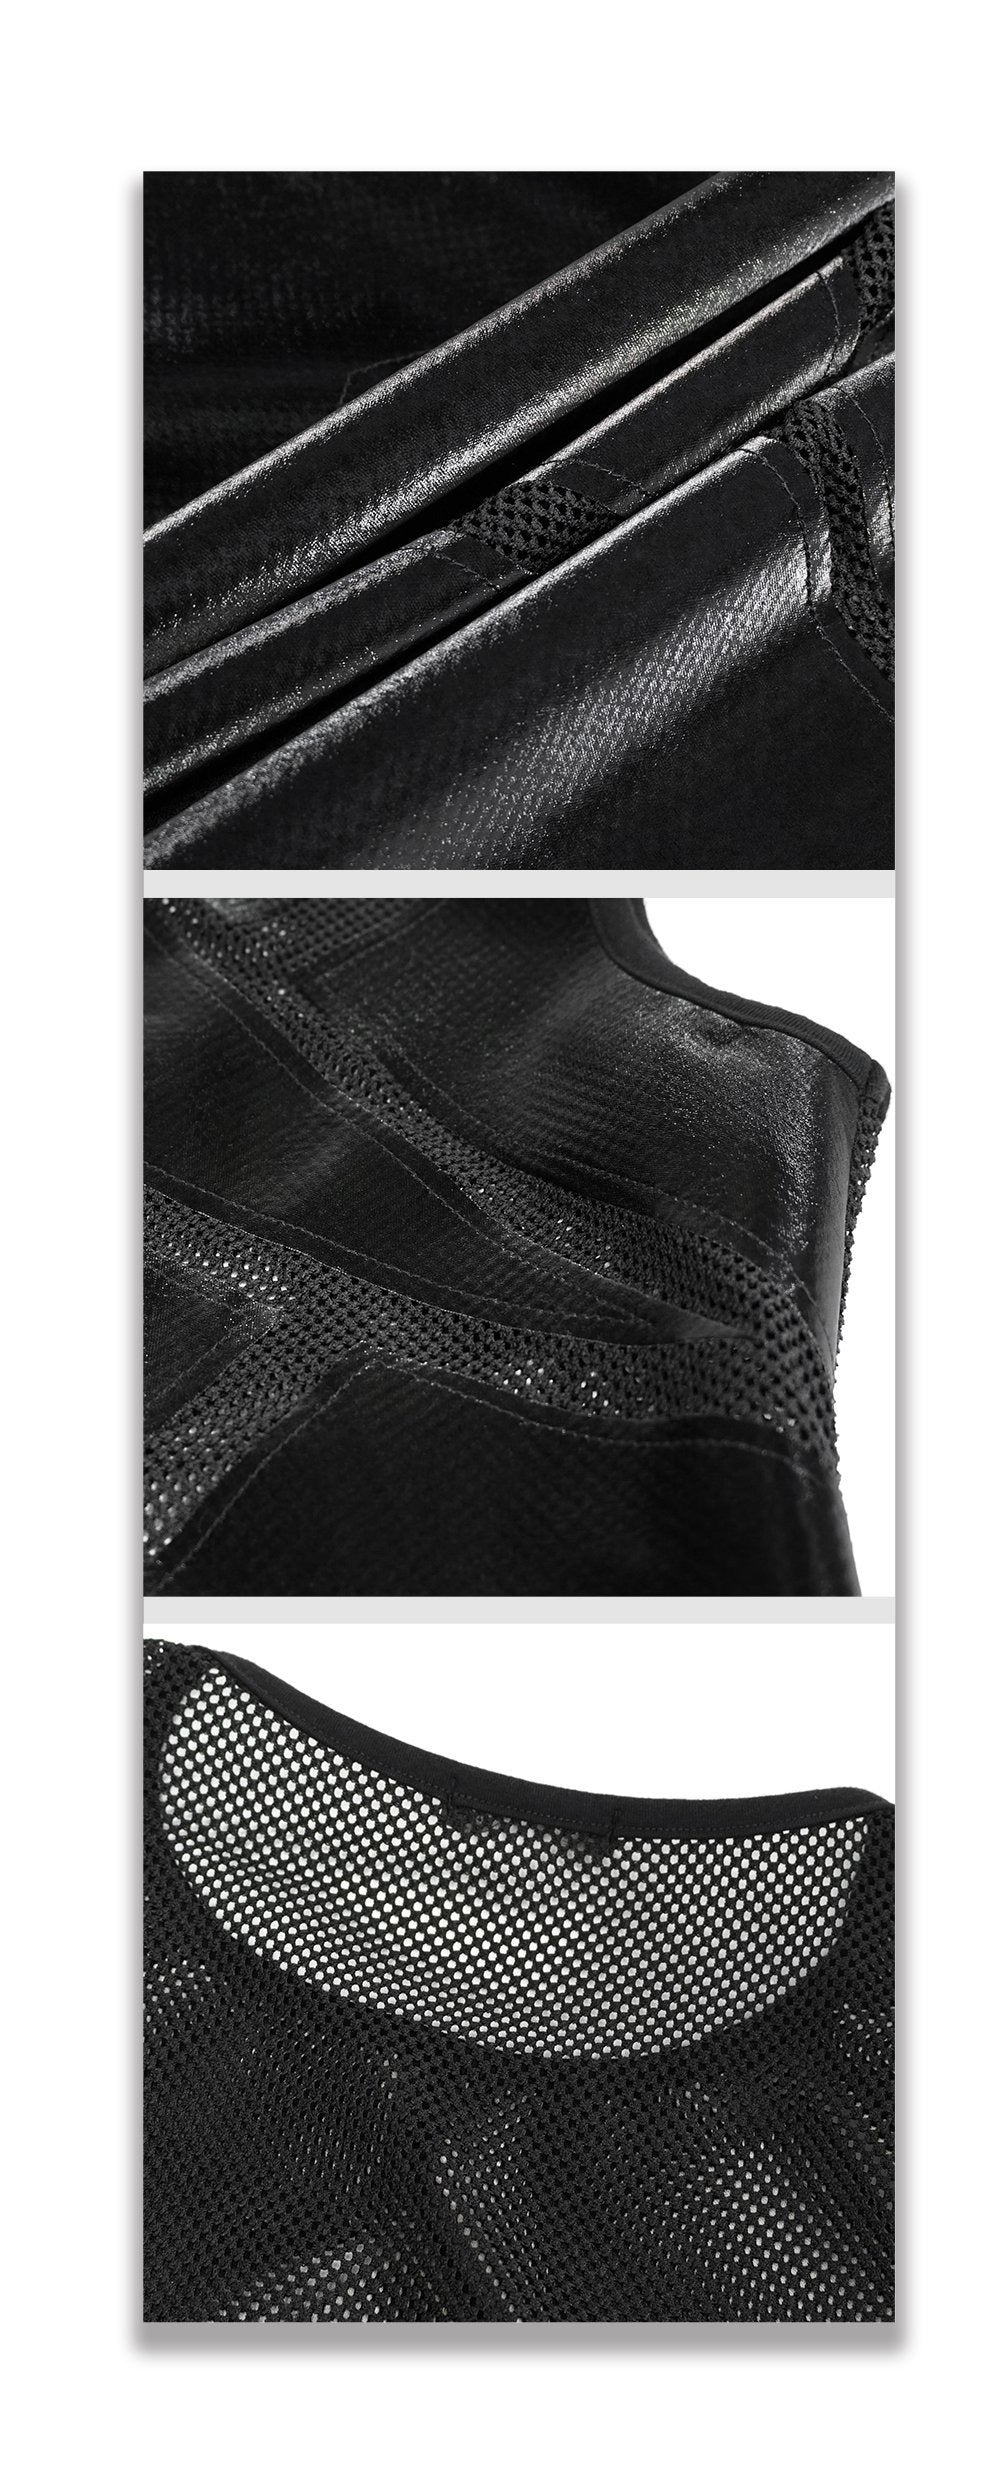 Tt161 Men Shiny Knit Patchwork Vest